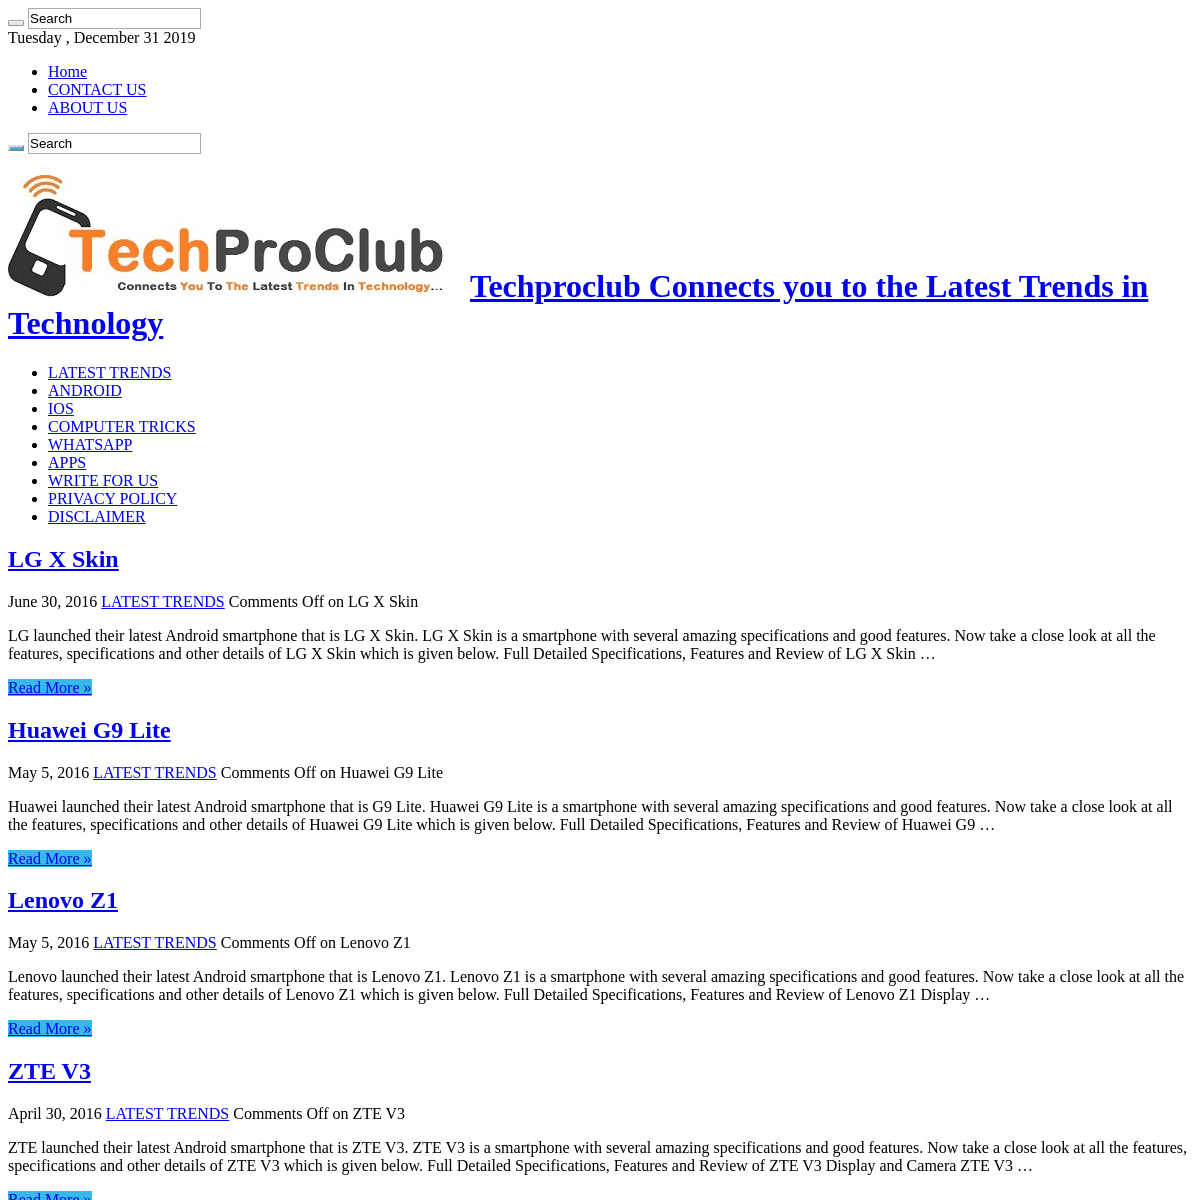 A complete backup of techproclub.com